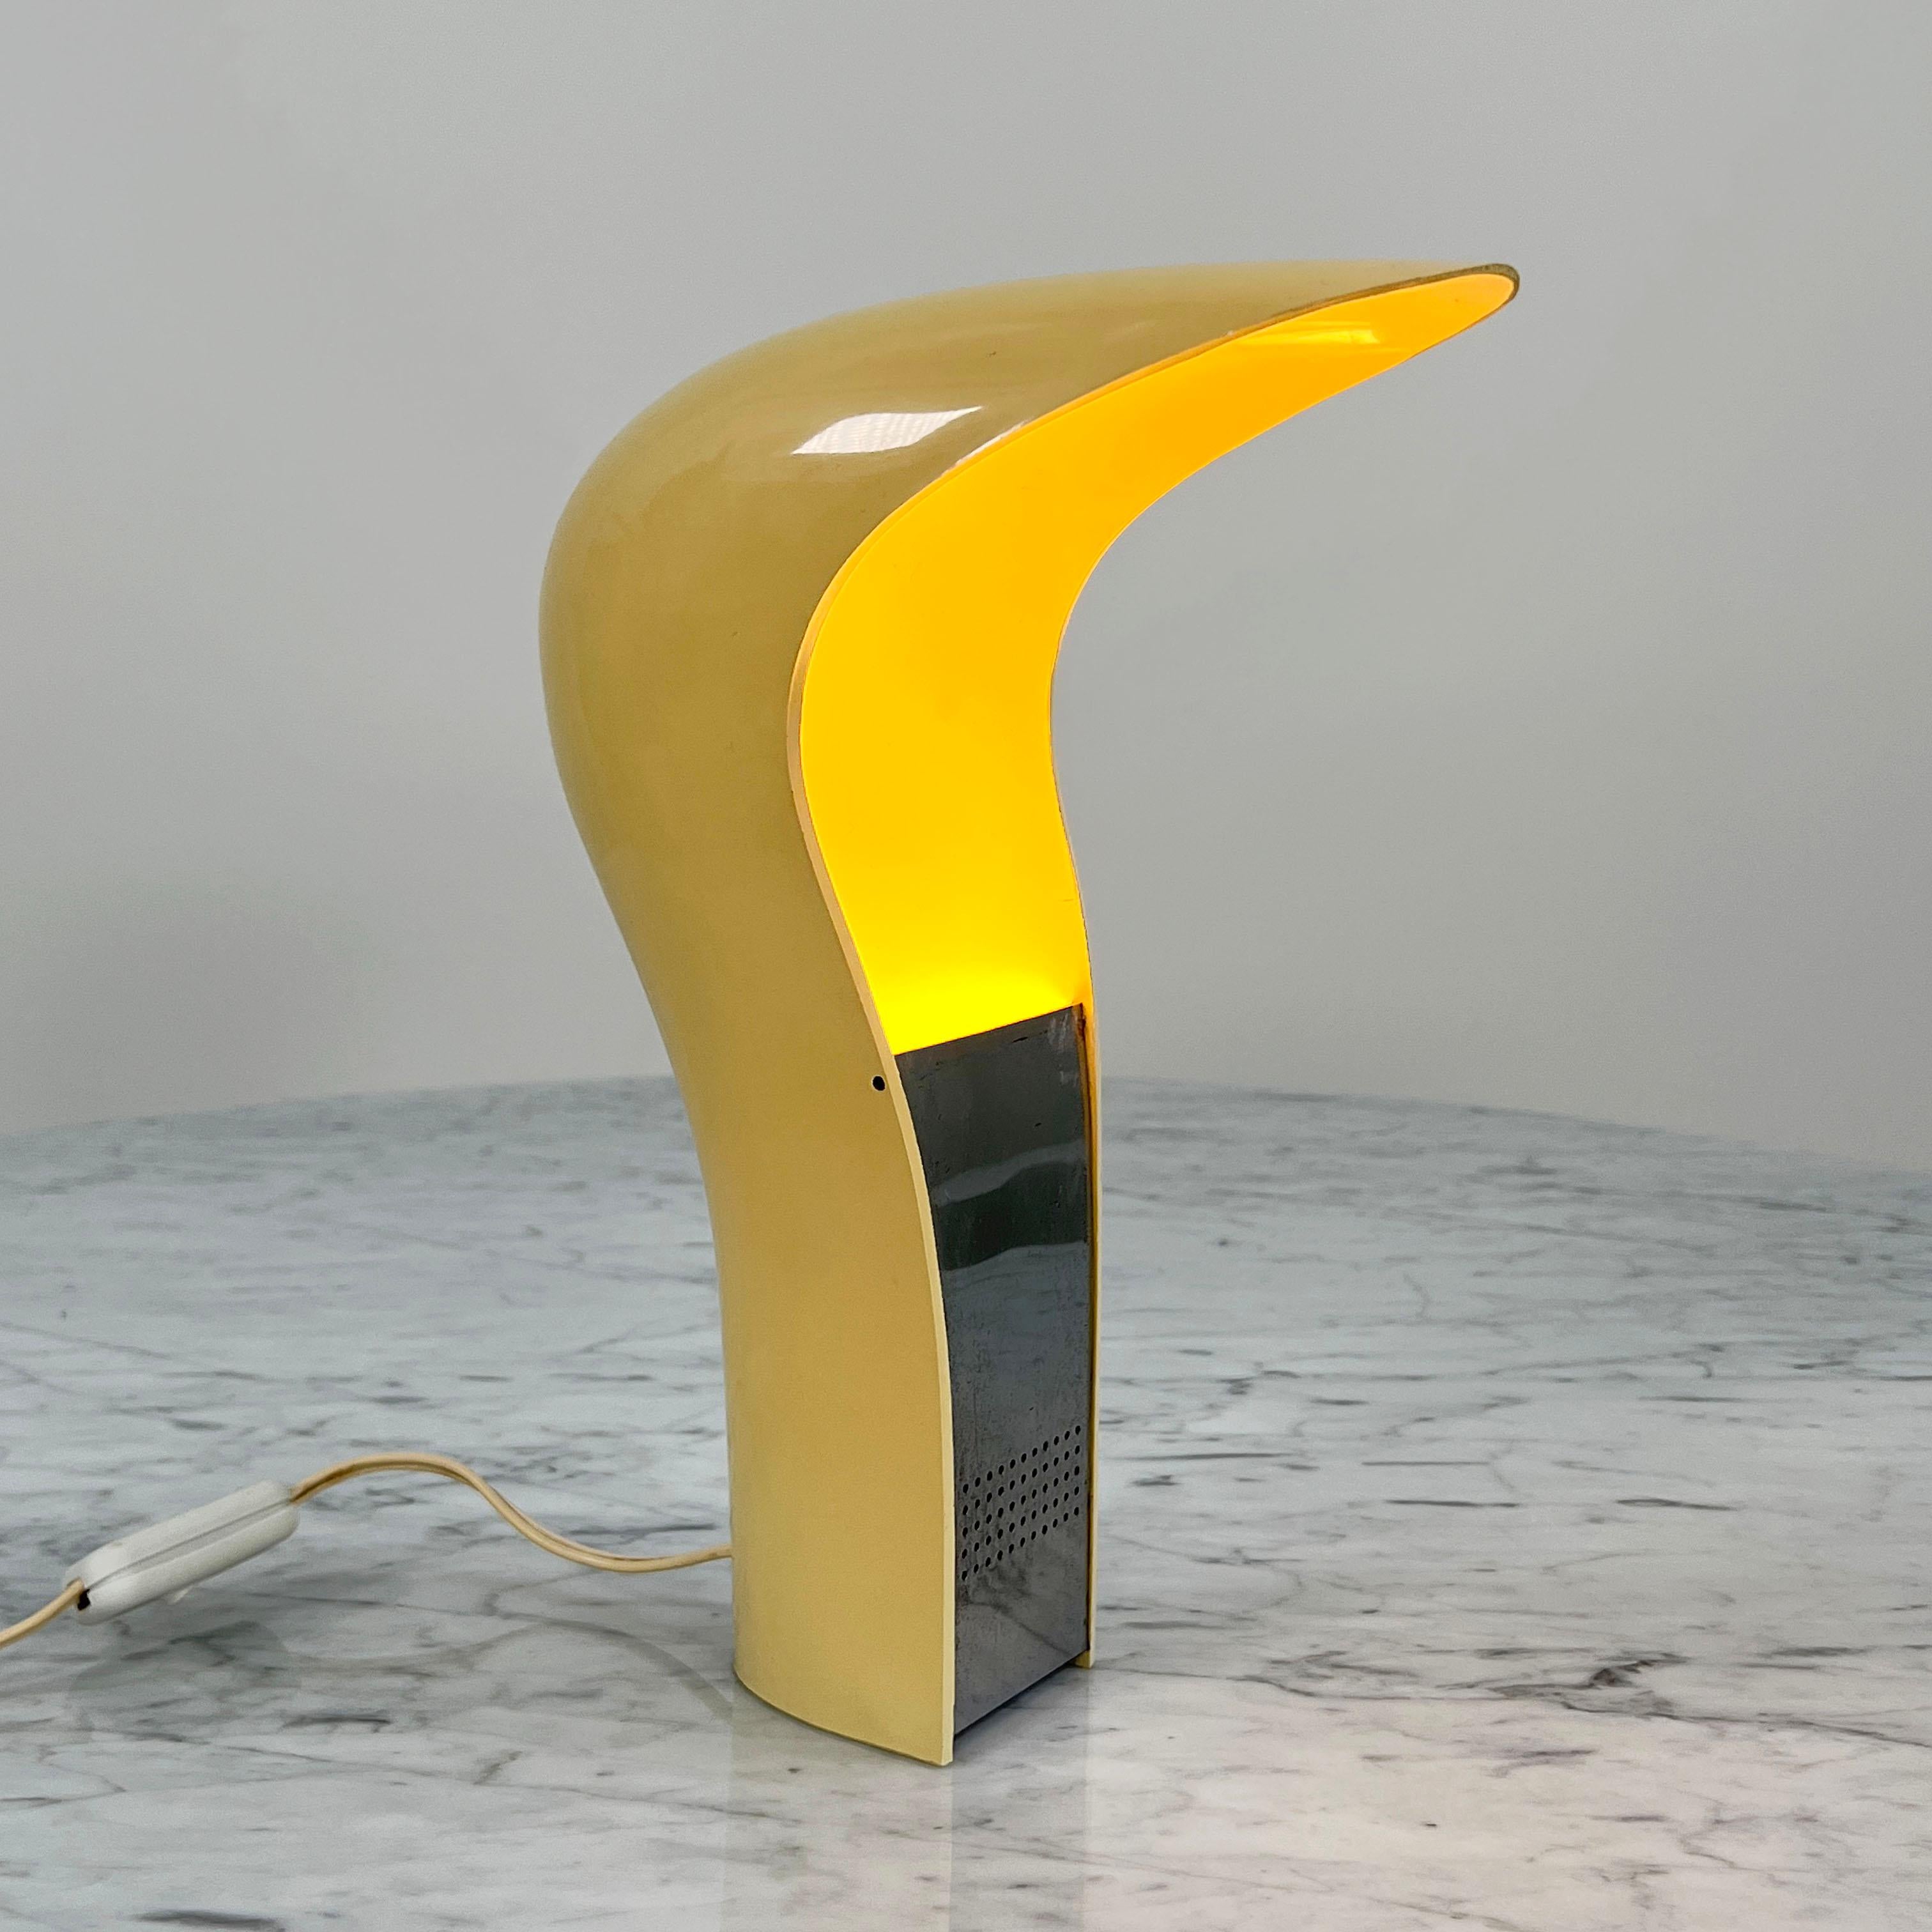 Designer - Cesare Casati & C. Emanuele Ponzio (Studio D.A.) 
Producer - Lamperti
Model - Pelota desk lamp 
Design Period - Seventies
Measurements - Width 11 cm x Depth 22 cm x Height 28 cm
Materials - Plastic, metal
Color - White, silver.